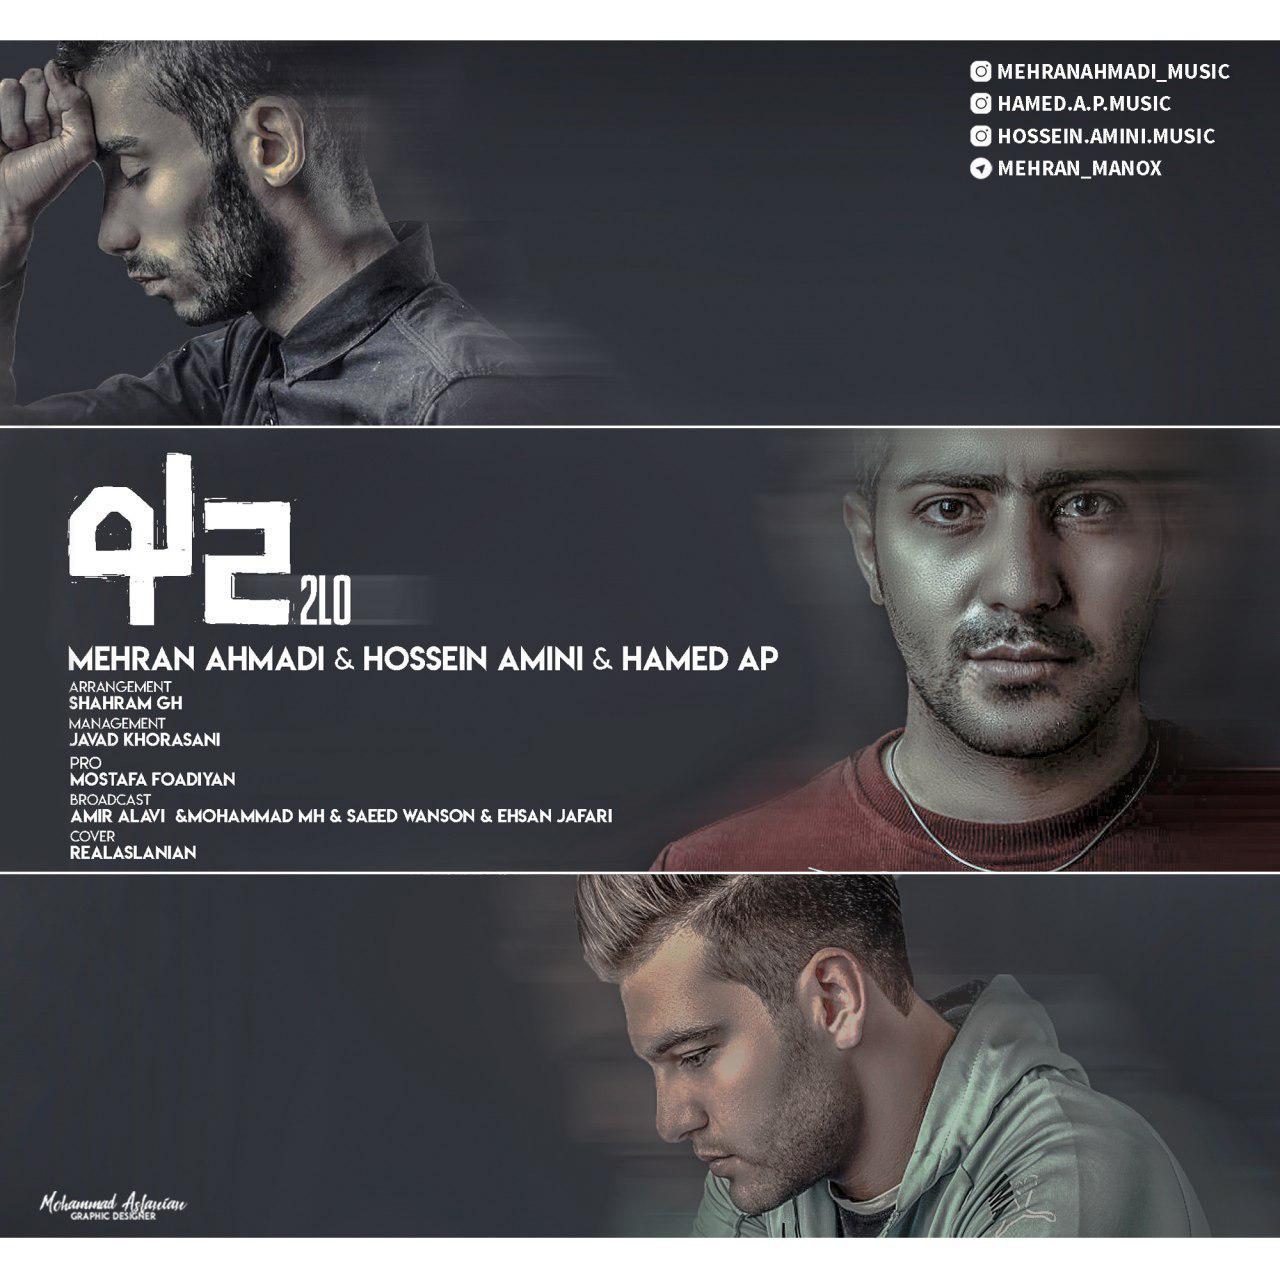 Mehran Ahmadi & Hossein Amini & Hamed AP – 2Lo